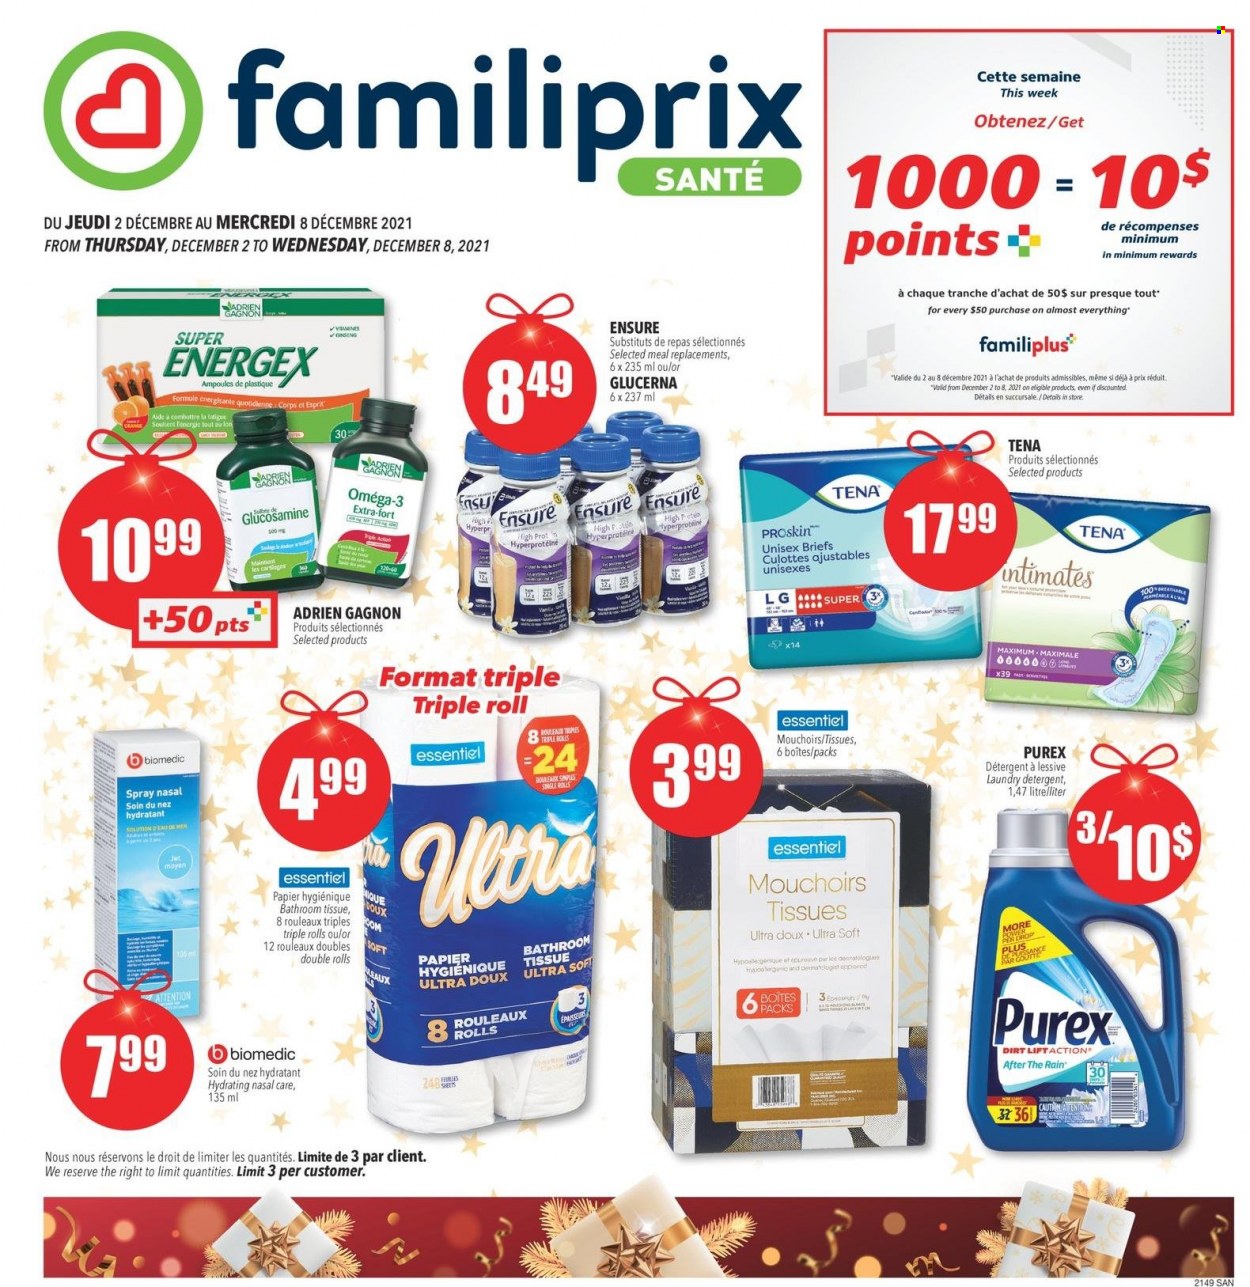 thumbnail - Familiprix Santé Flyer - December 02, 2021 - December 08, 2021 - Sales products - bath tissue, laundry detergent, Purex, Jet, Omega-3, Glucerna, detergent. Page 1.